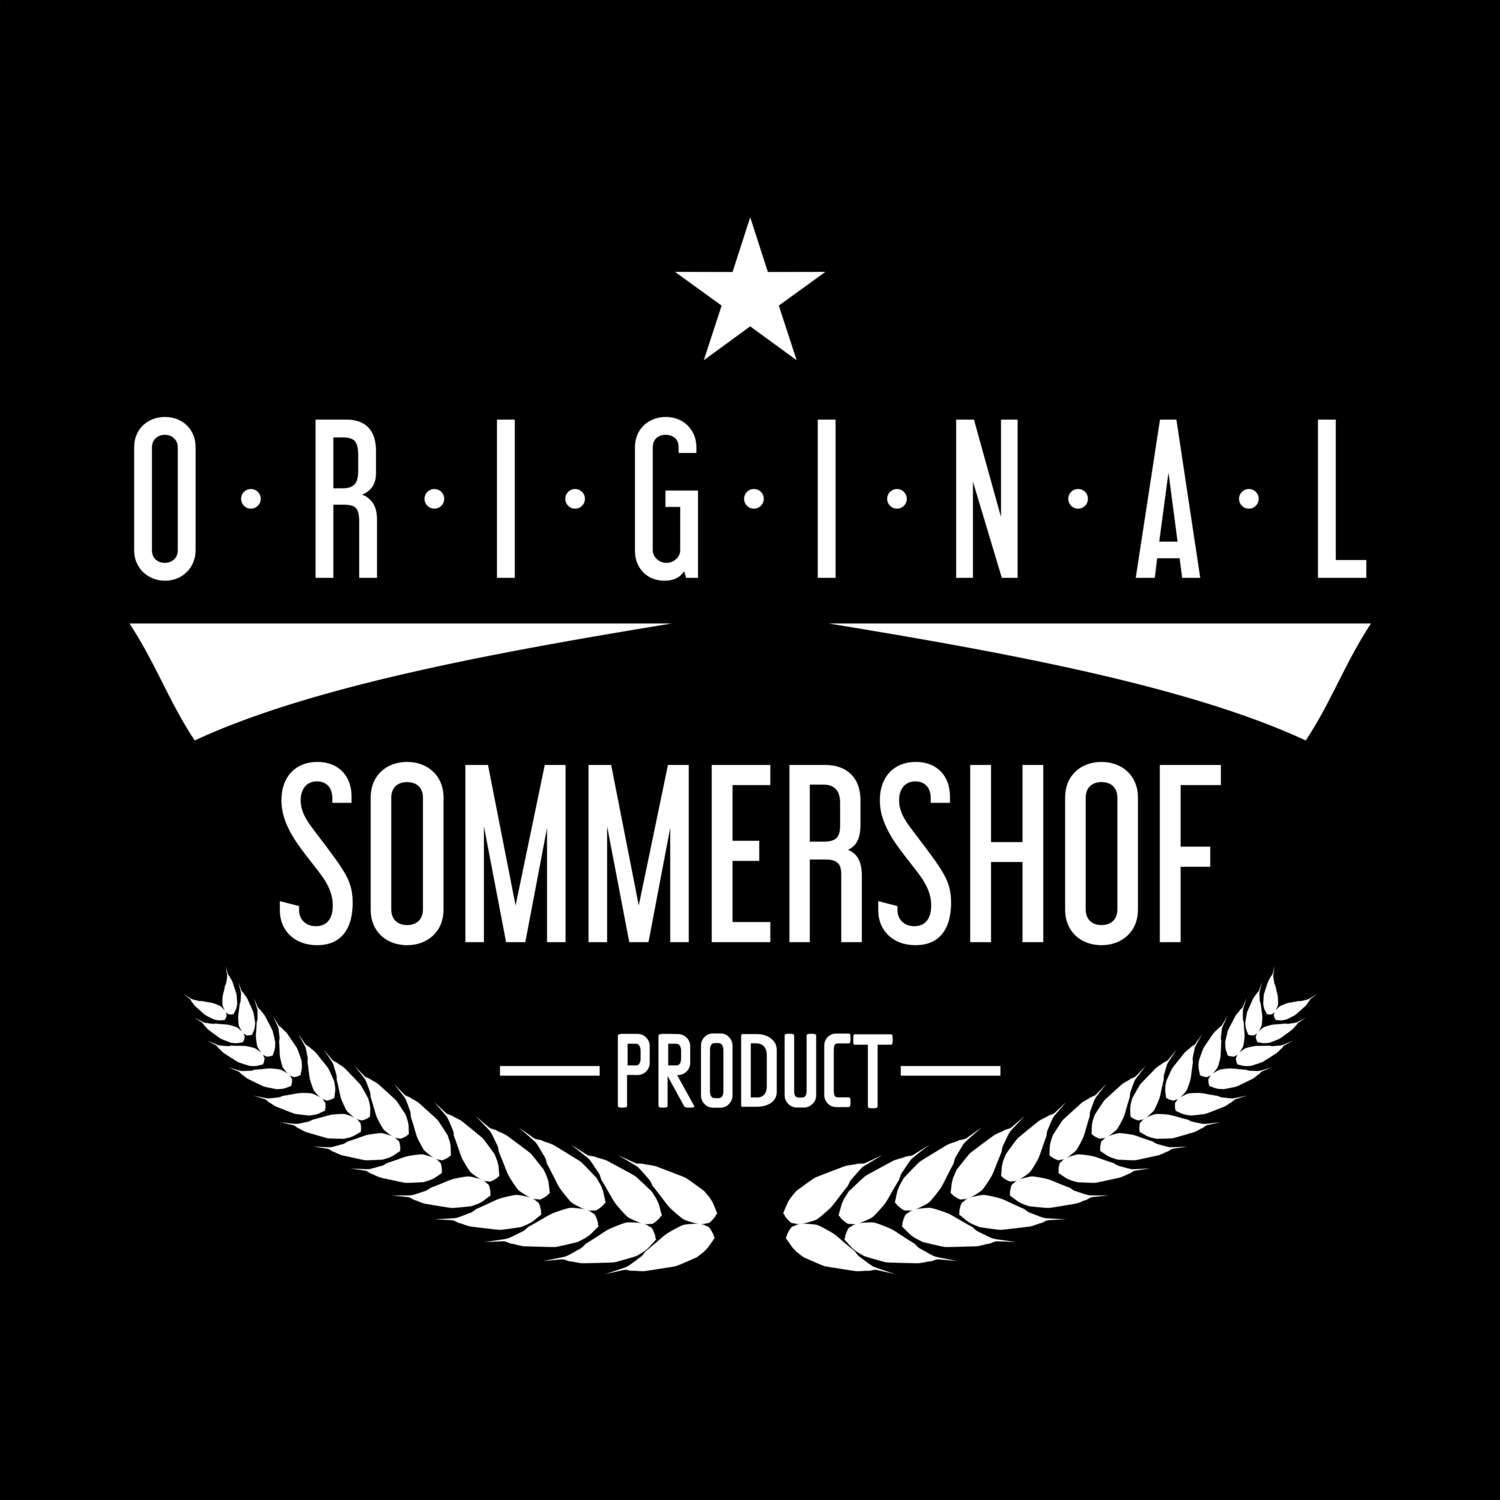 Sommershof T-Shirt »Original Product«